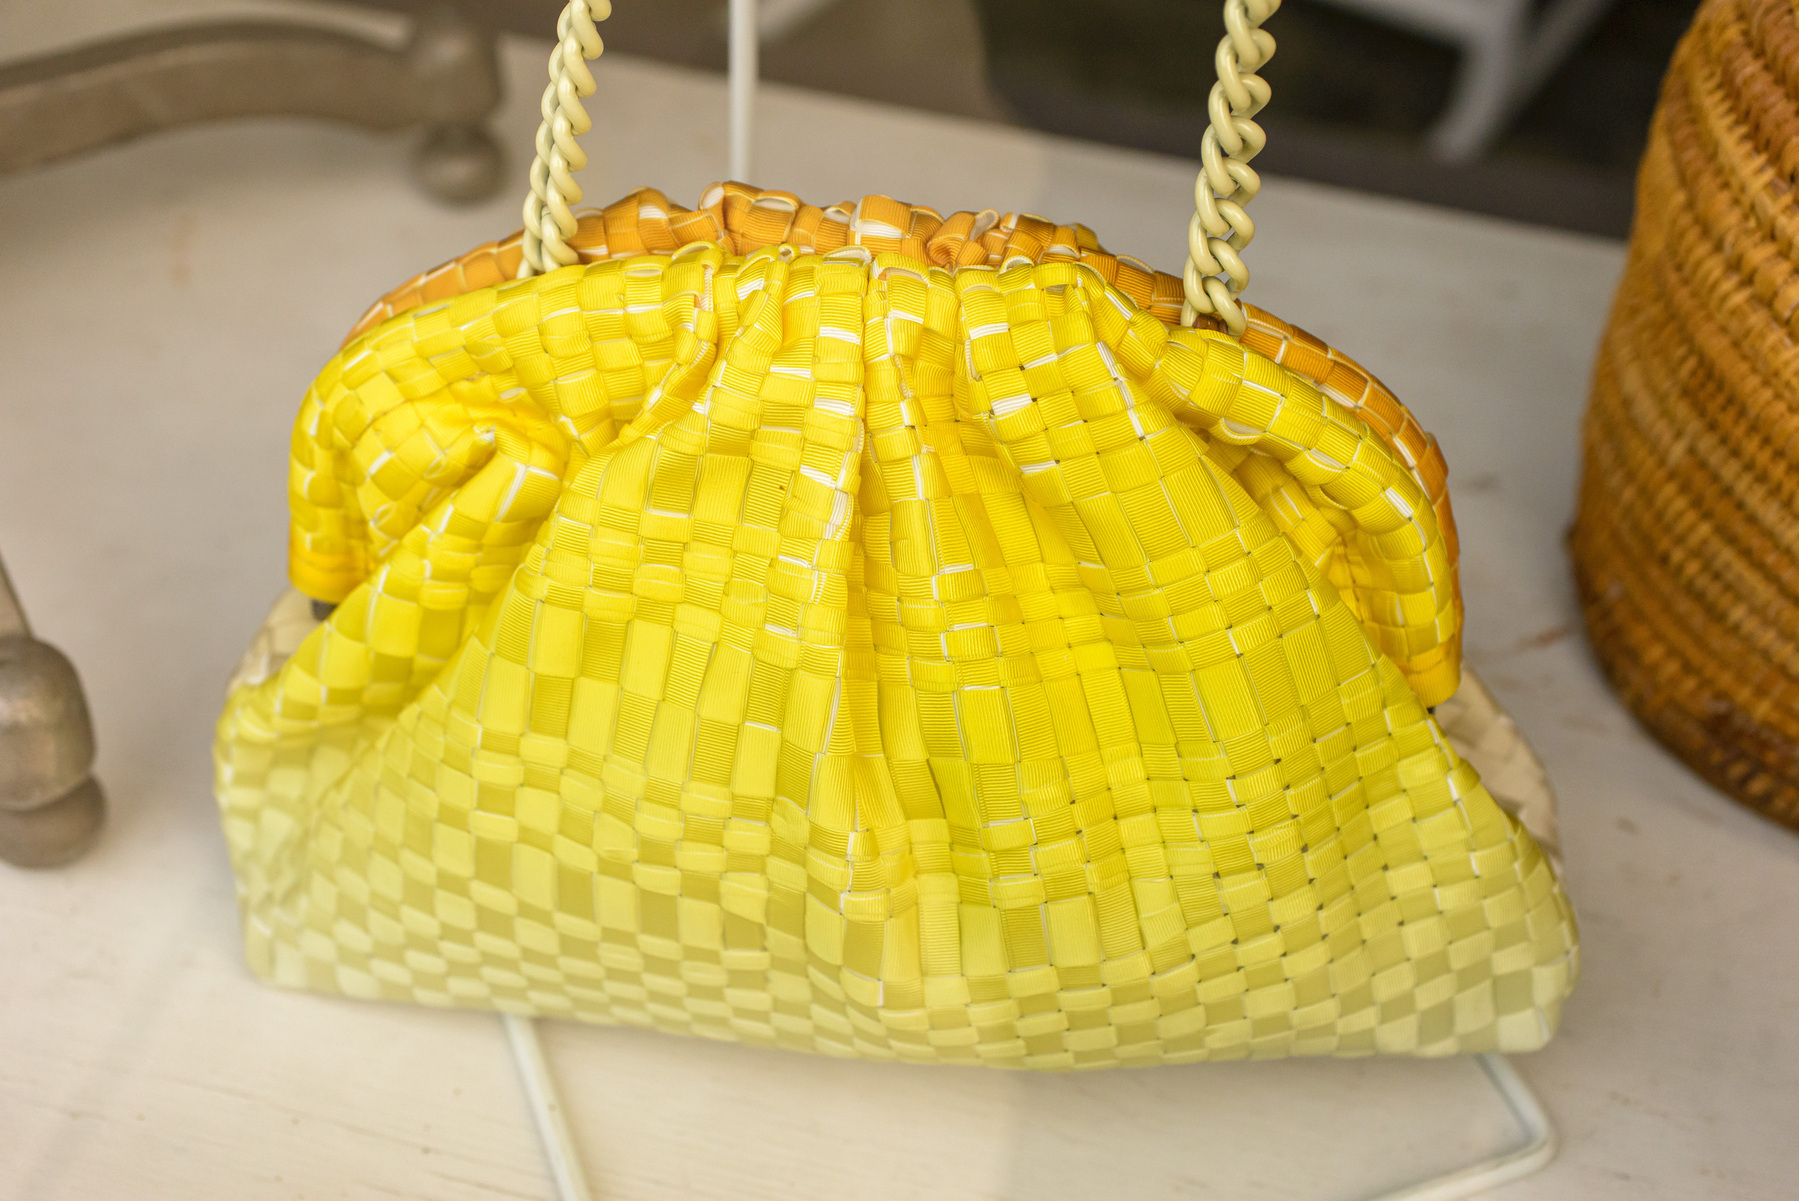 Yellow woven purse in a shop window.